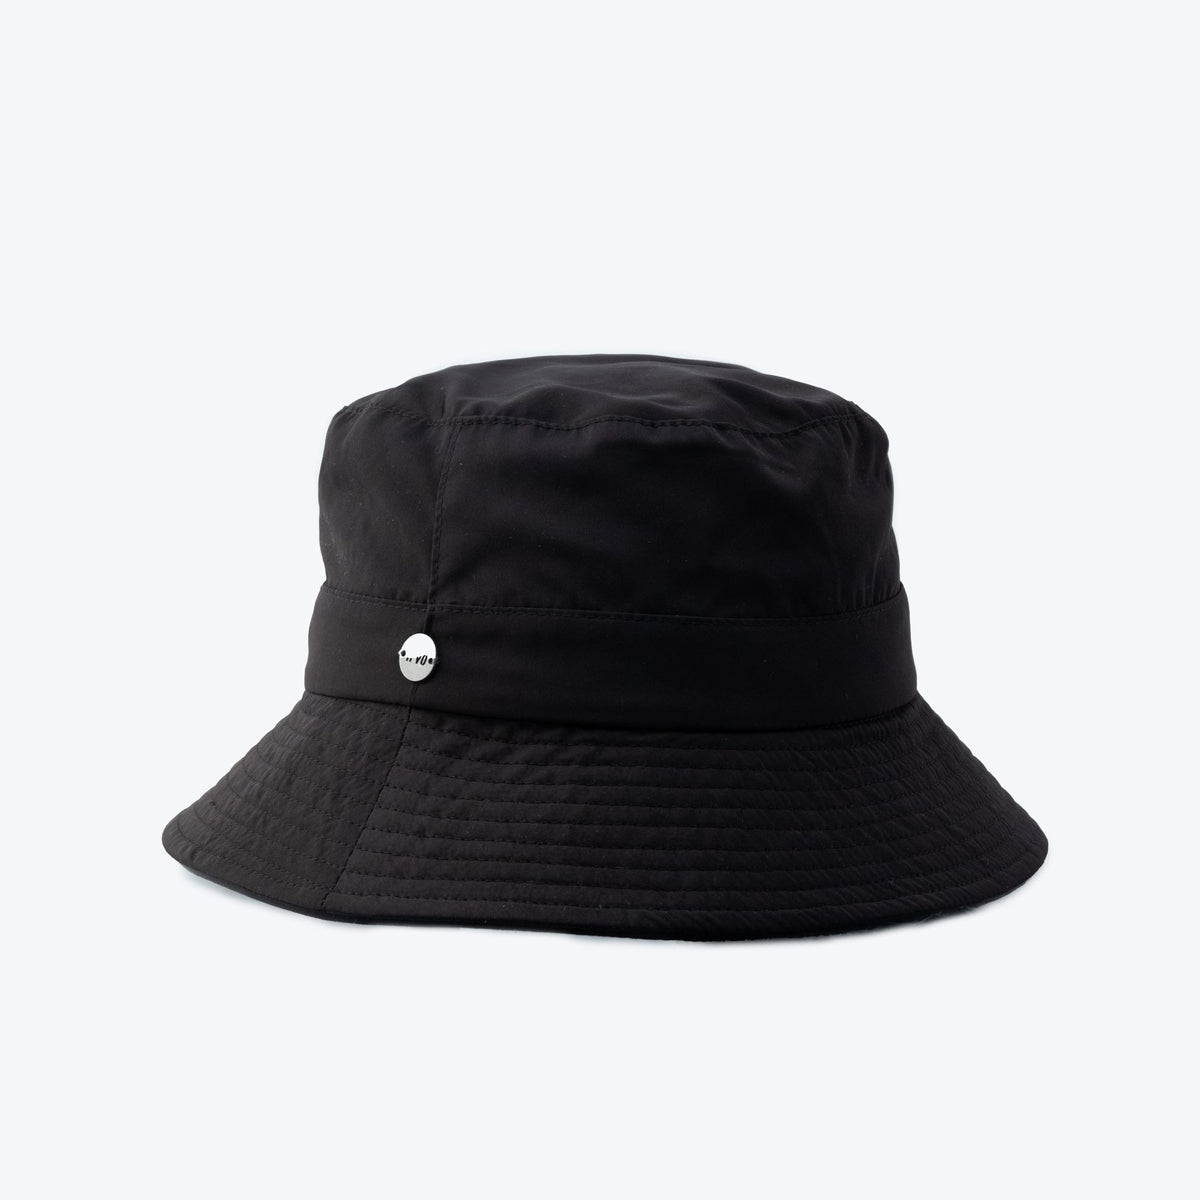 Bolsla Chapeau Noir